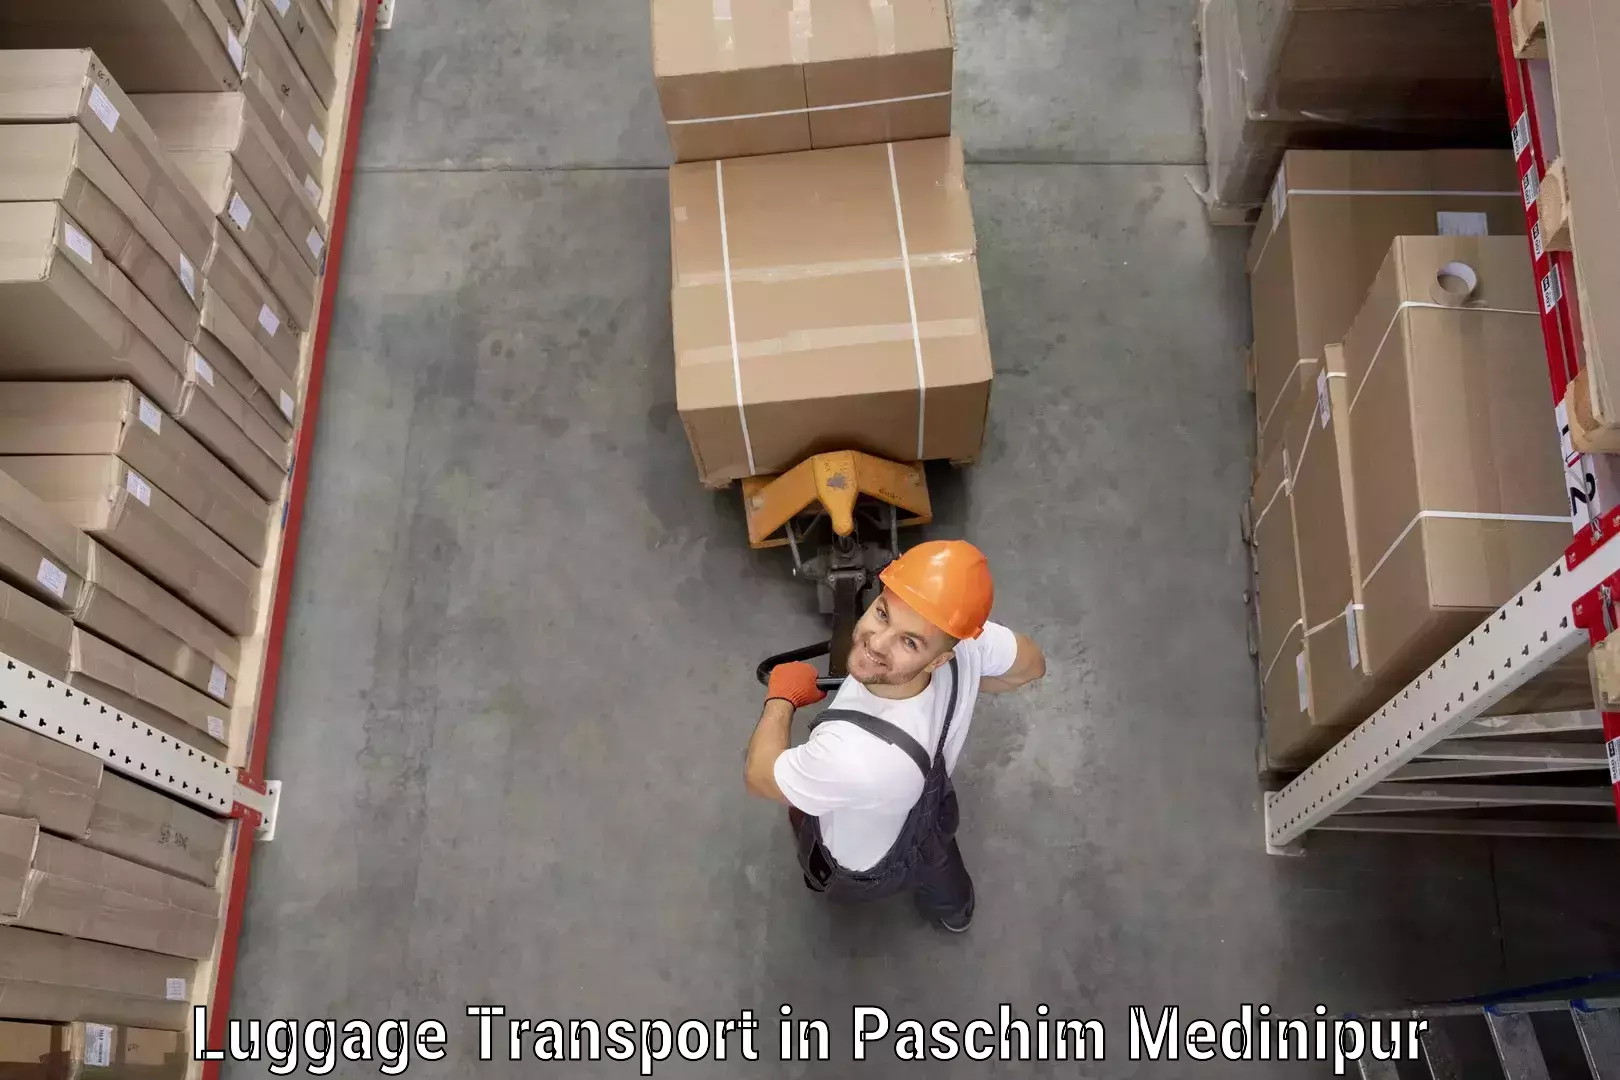 Luggage forwarding service in Paschim Medinipur